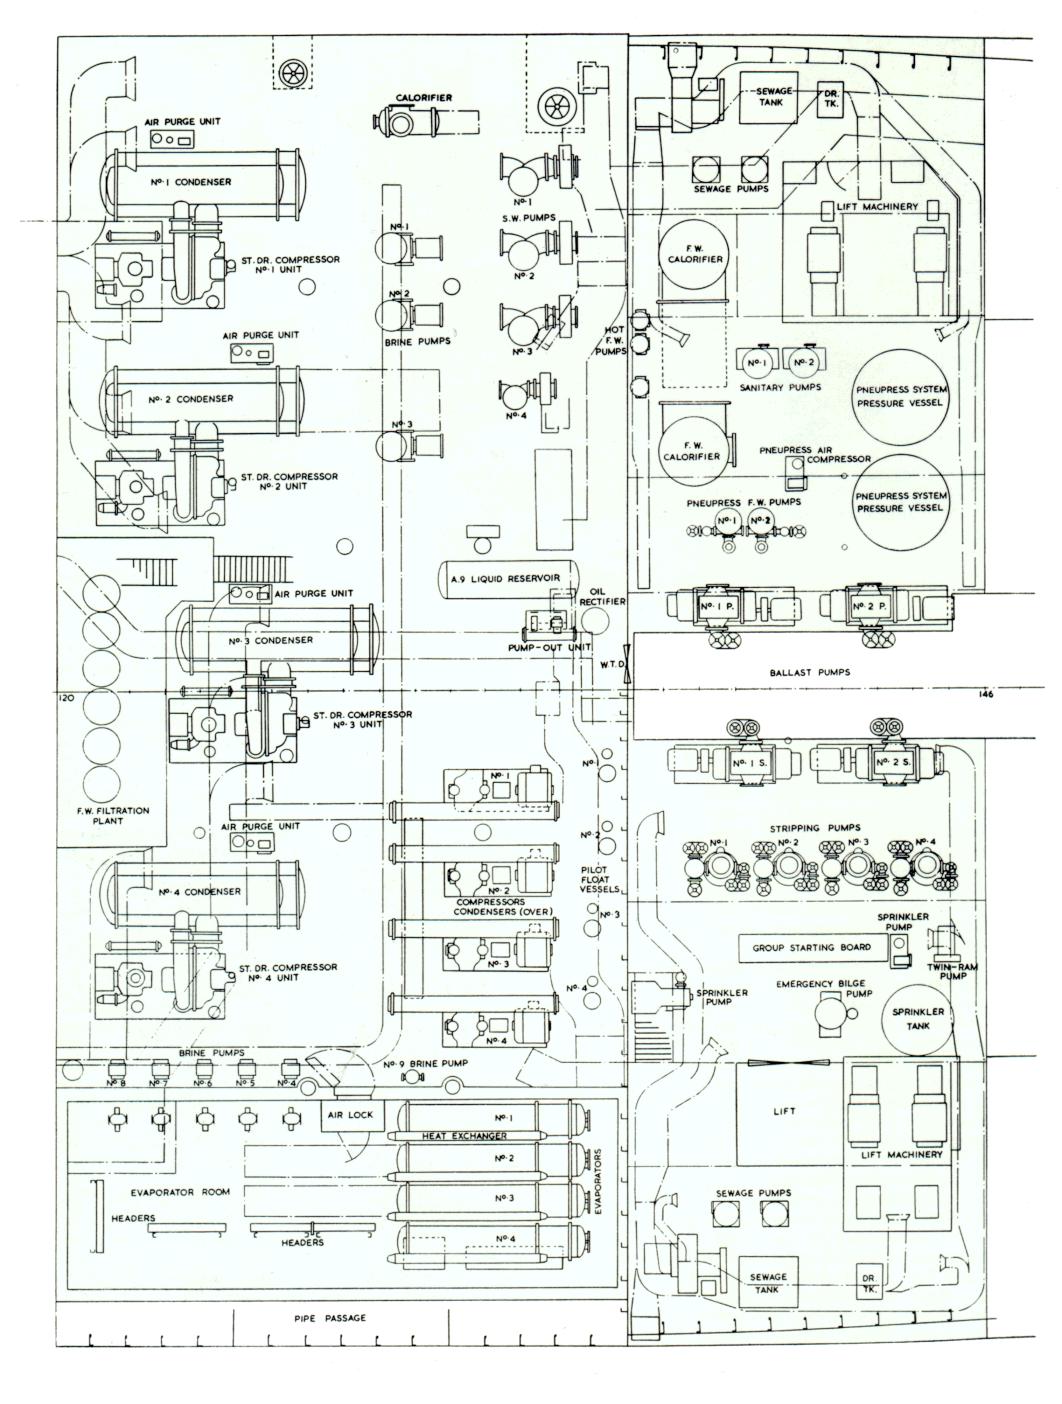 Canberra Plan - Pump Room & Refrigeration Machinery.JPG